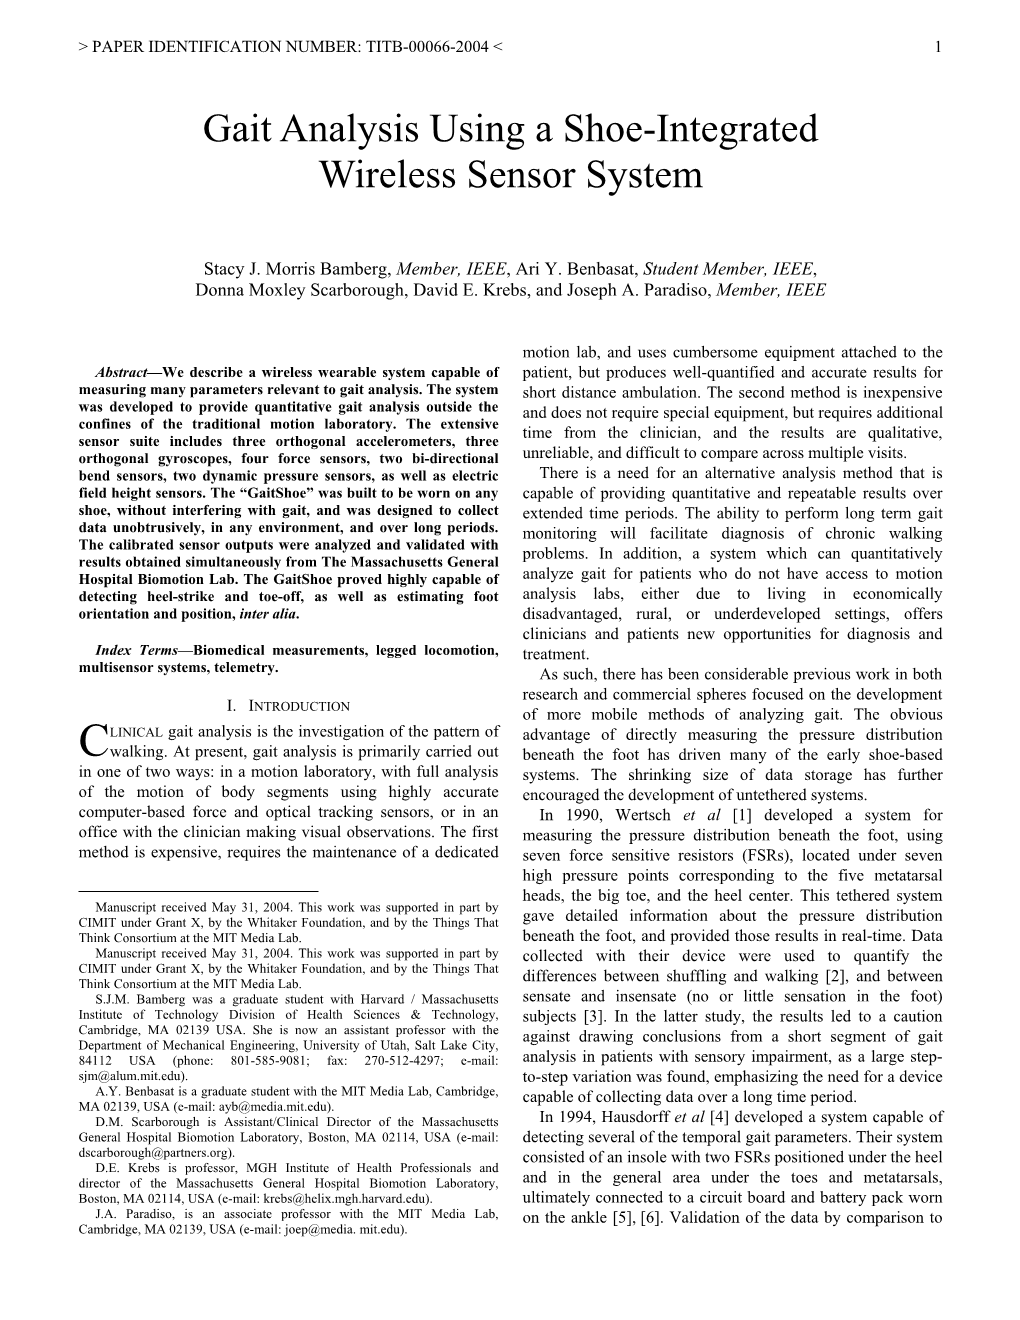 Gait Analysis Using a Shoe-Integrated Wireless Sensor System